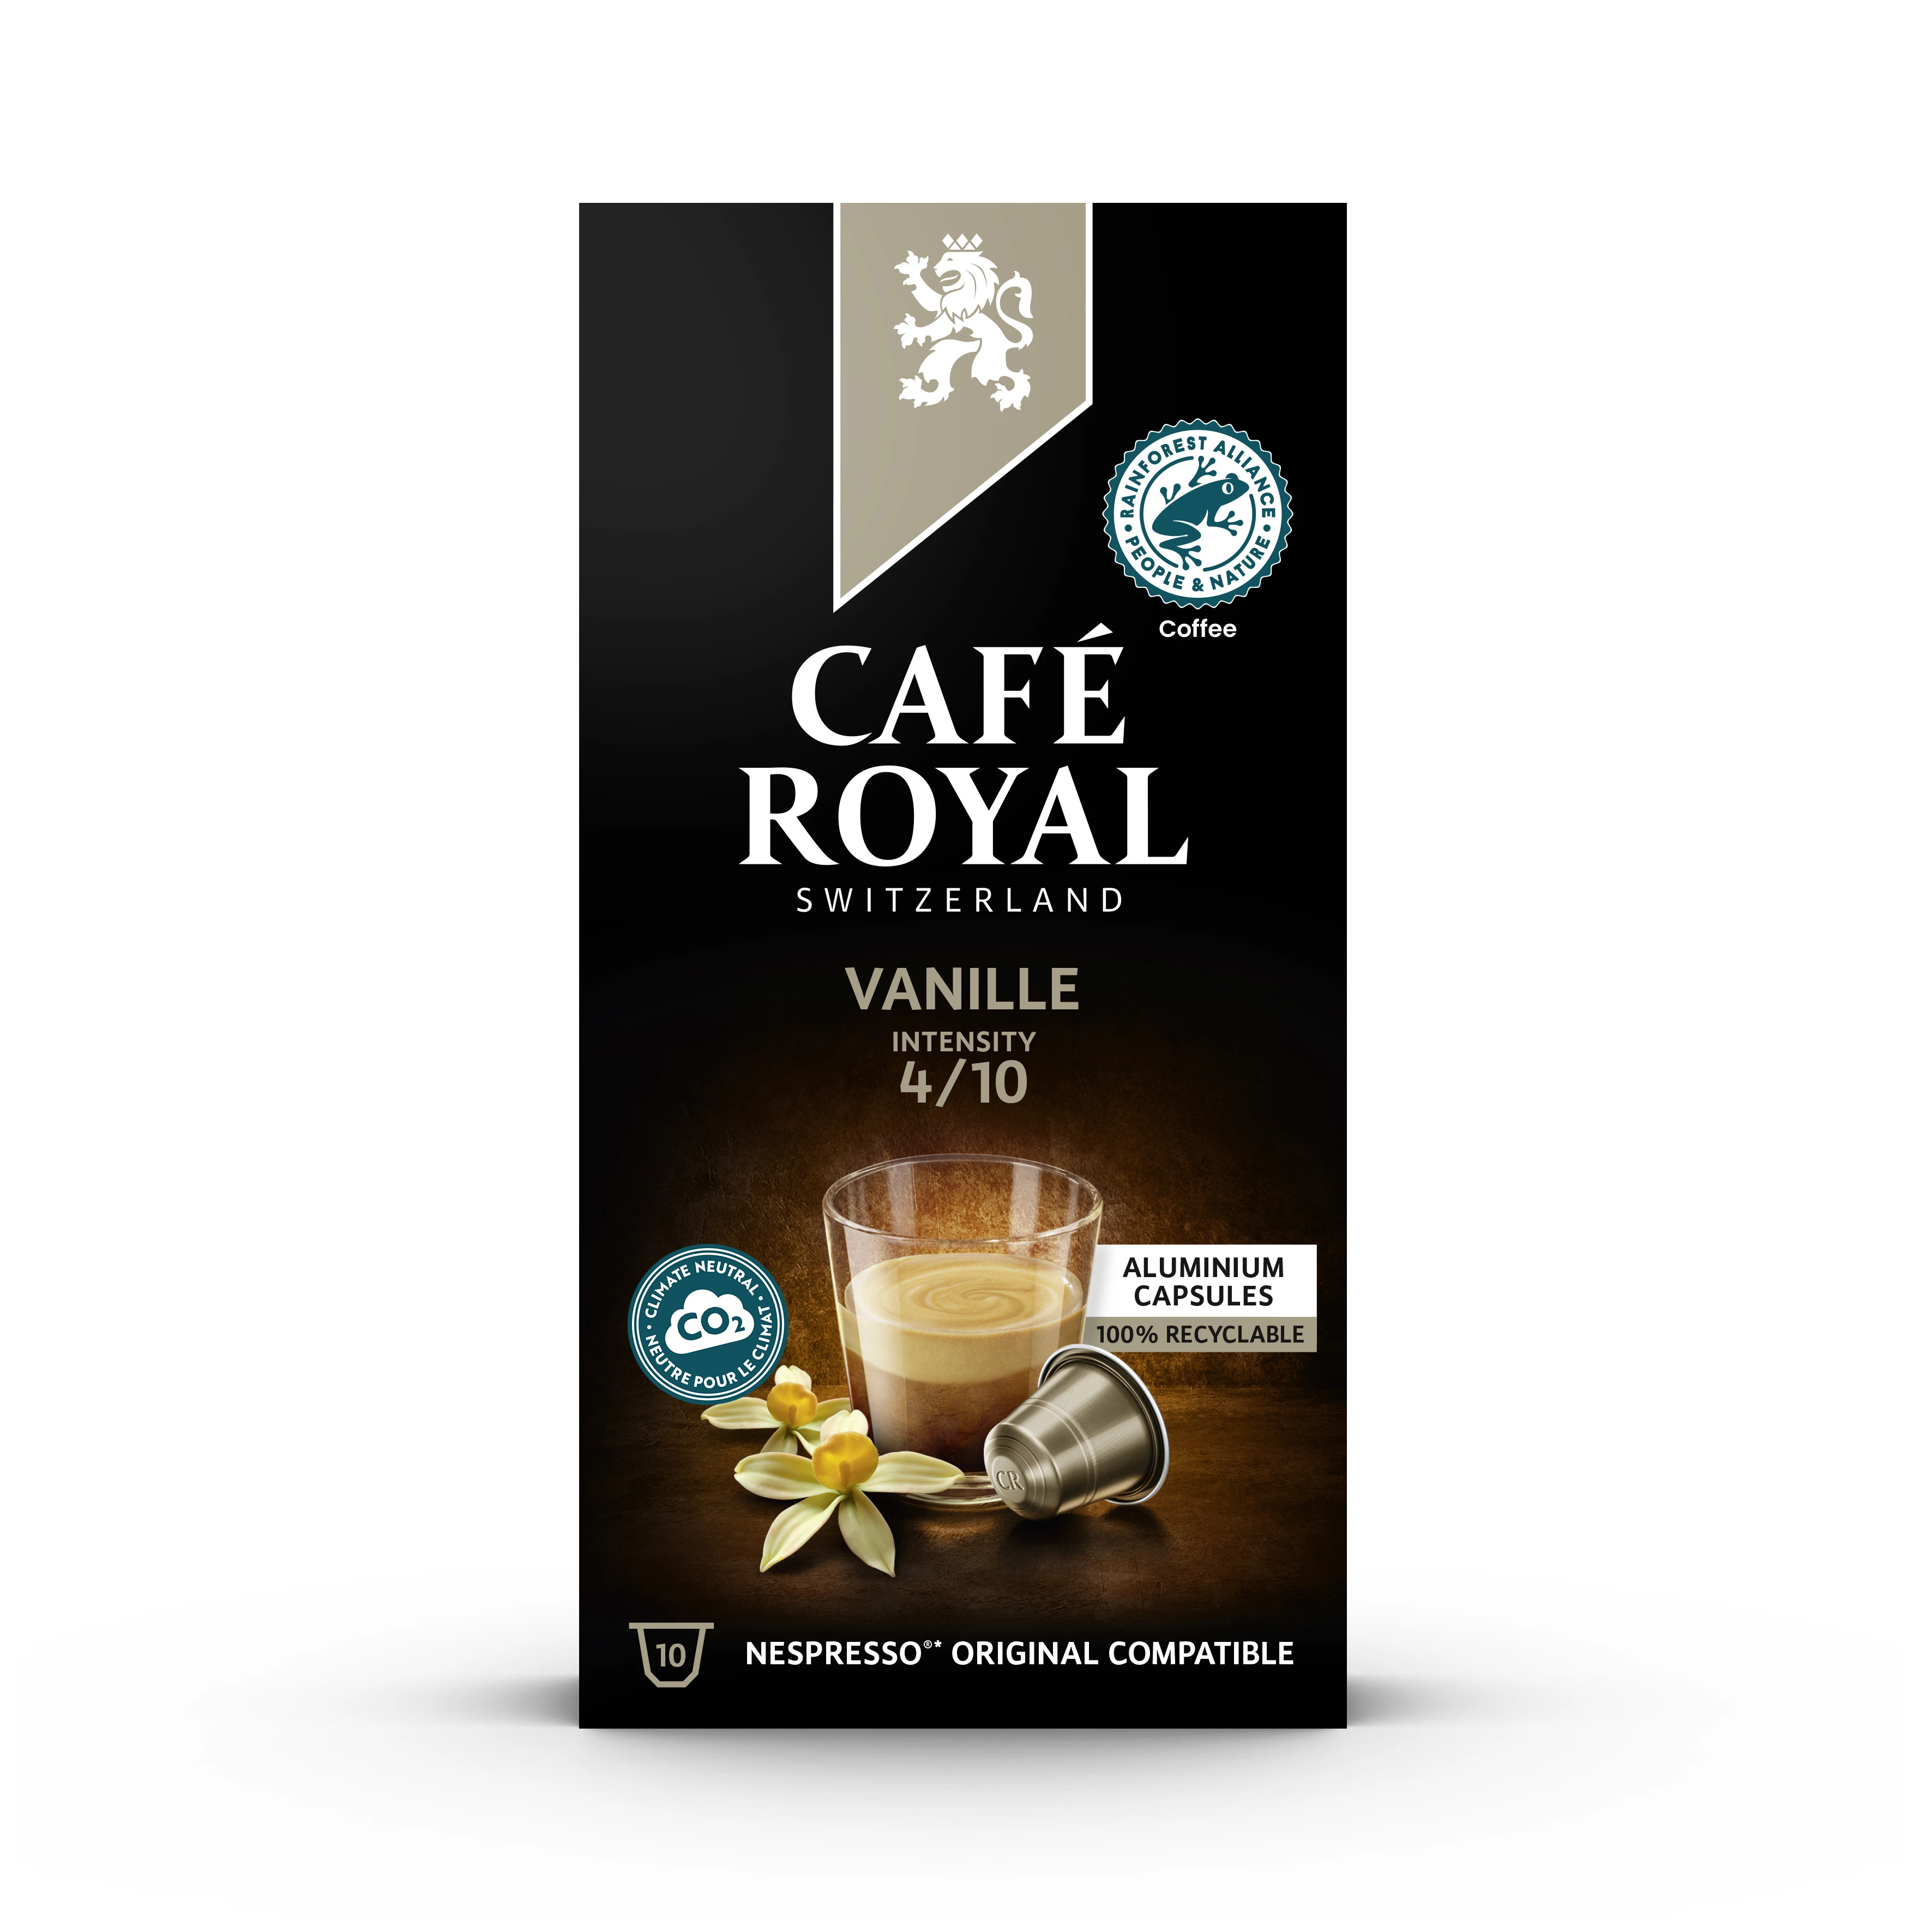 Café Royal Ns AluVanillex10 5